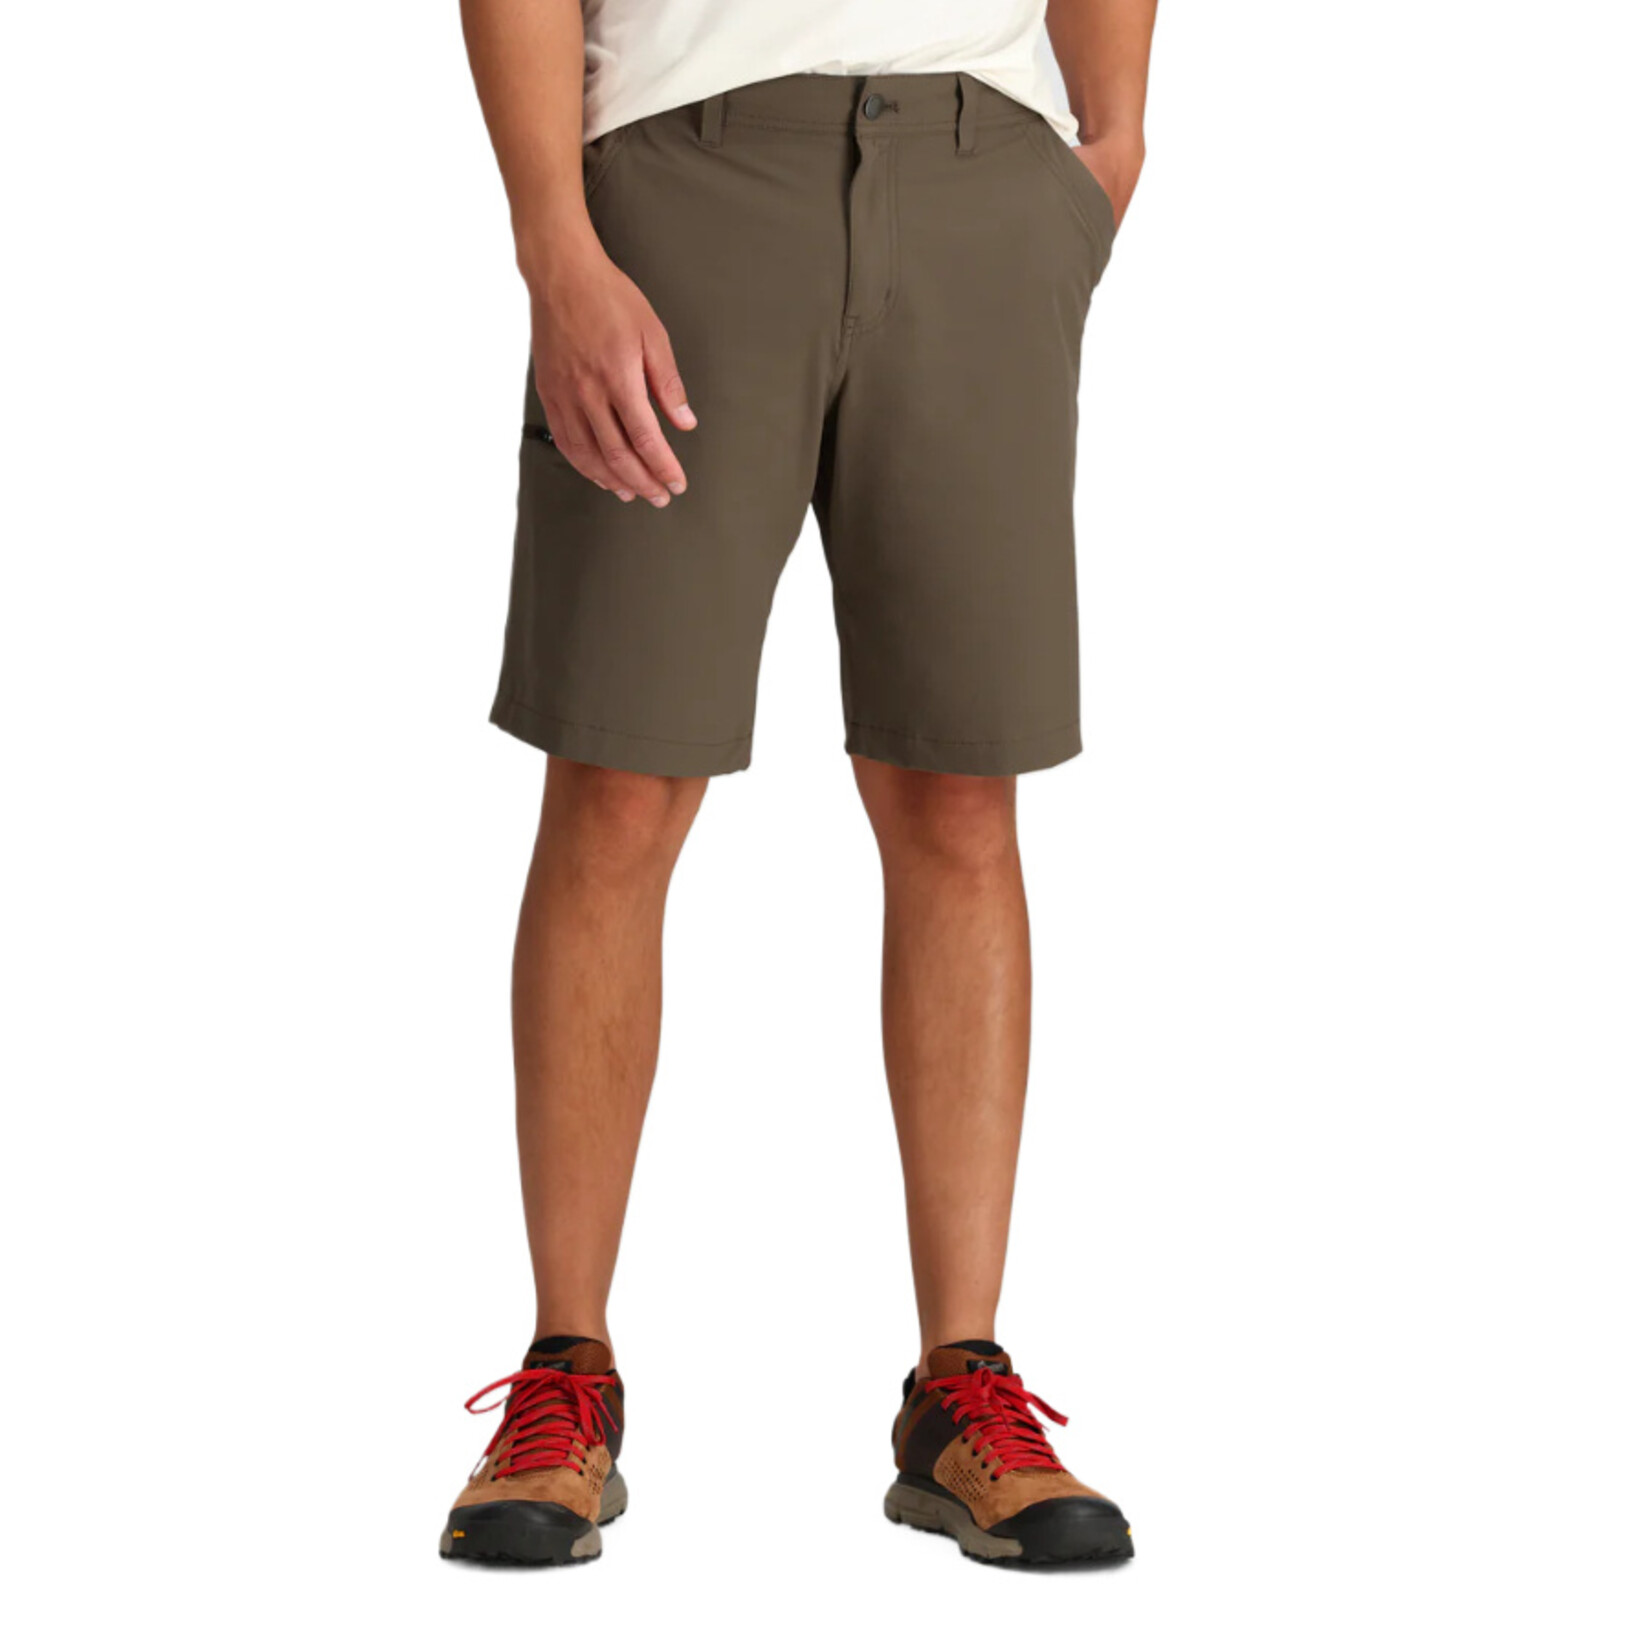 Outdoor Research Ferrosi Shorts, 10" inseam